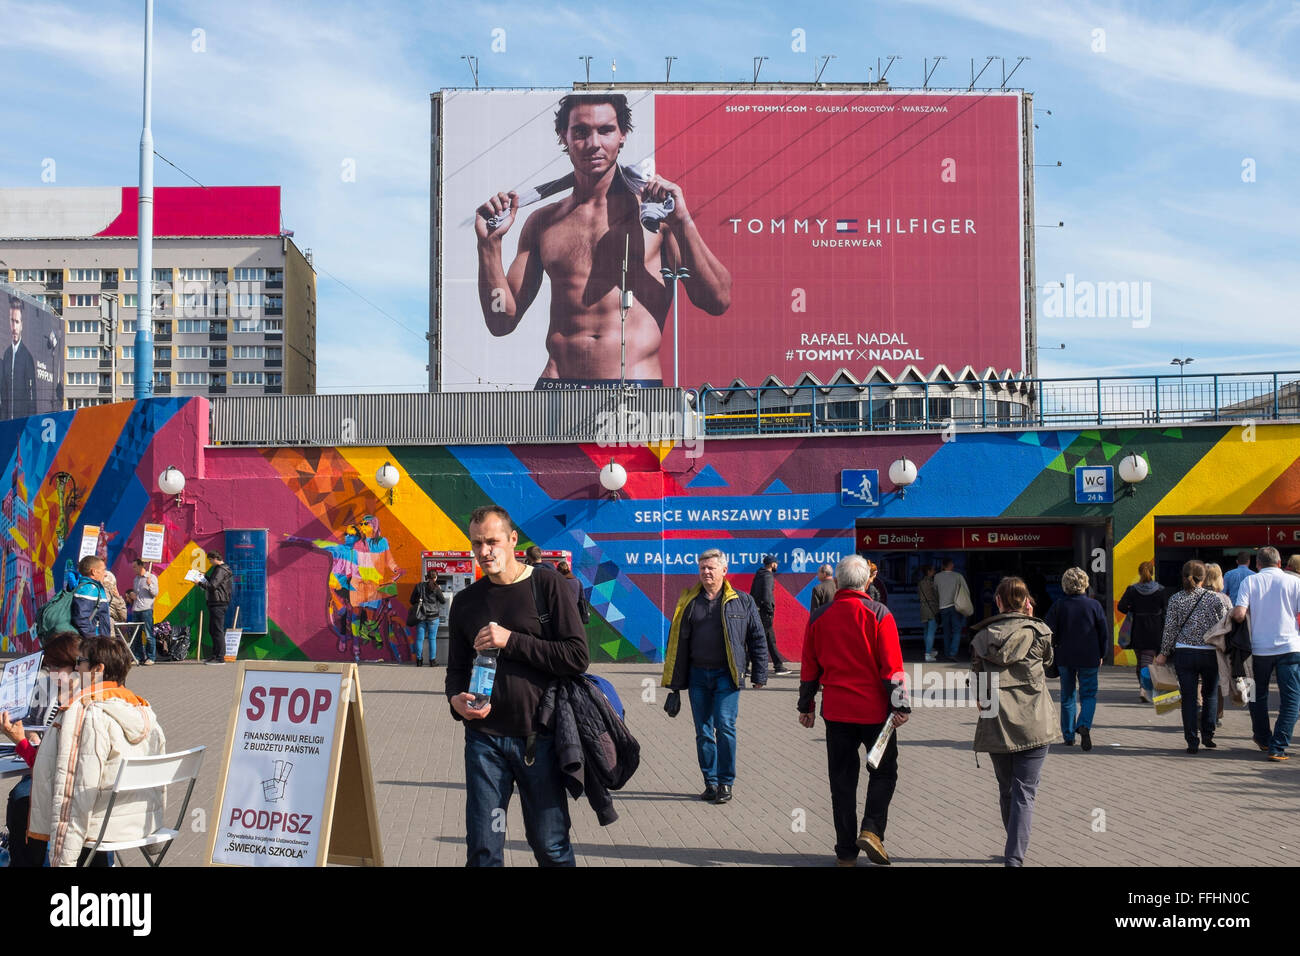 Rafael Nadal sur Tommy Hilfiger billboard dans le centre de Varsovie, Pologne Banque D'Images